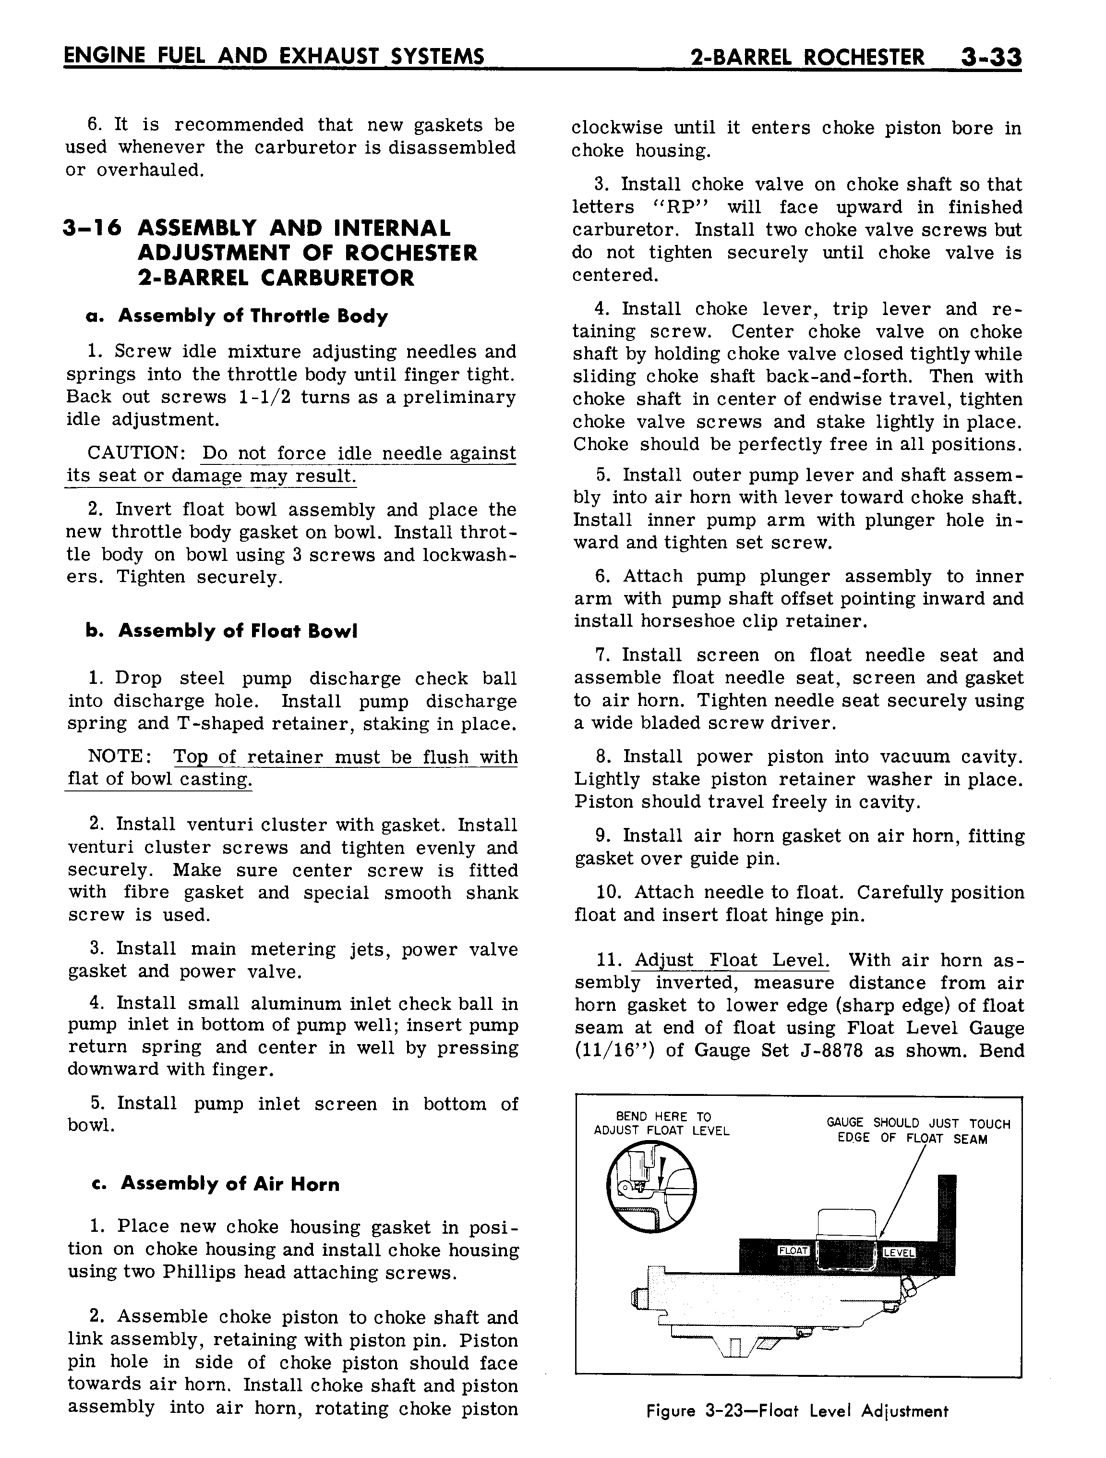 n_04 1961 Buick Shop Manual - Engine Fuel & Exhaust-033-033.jpg